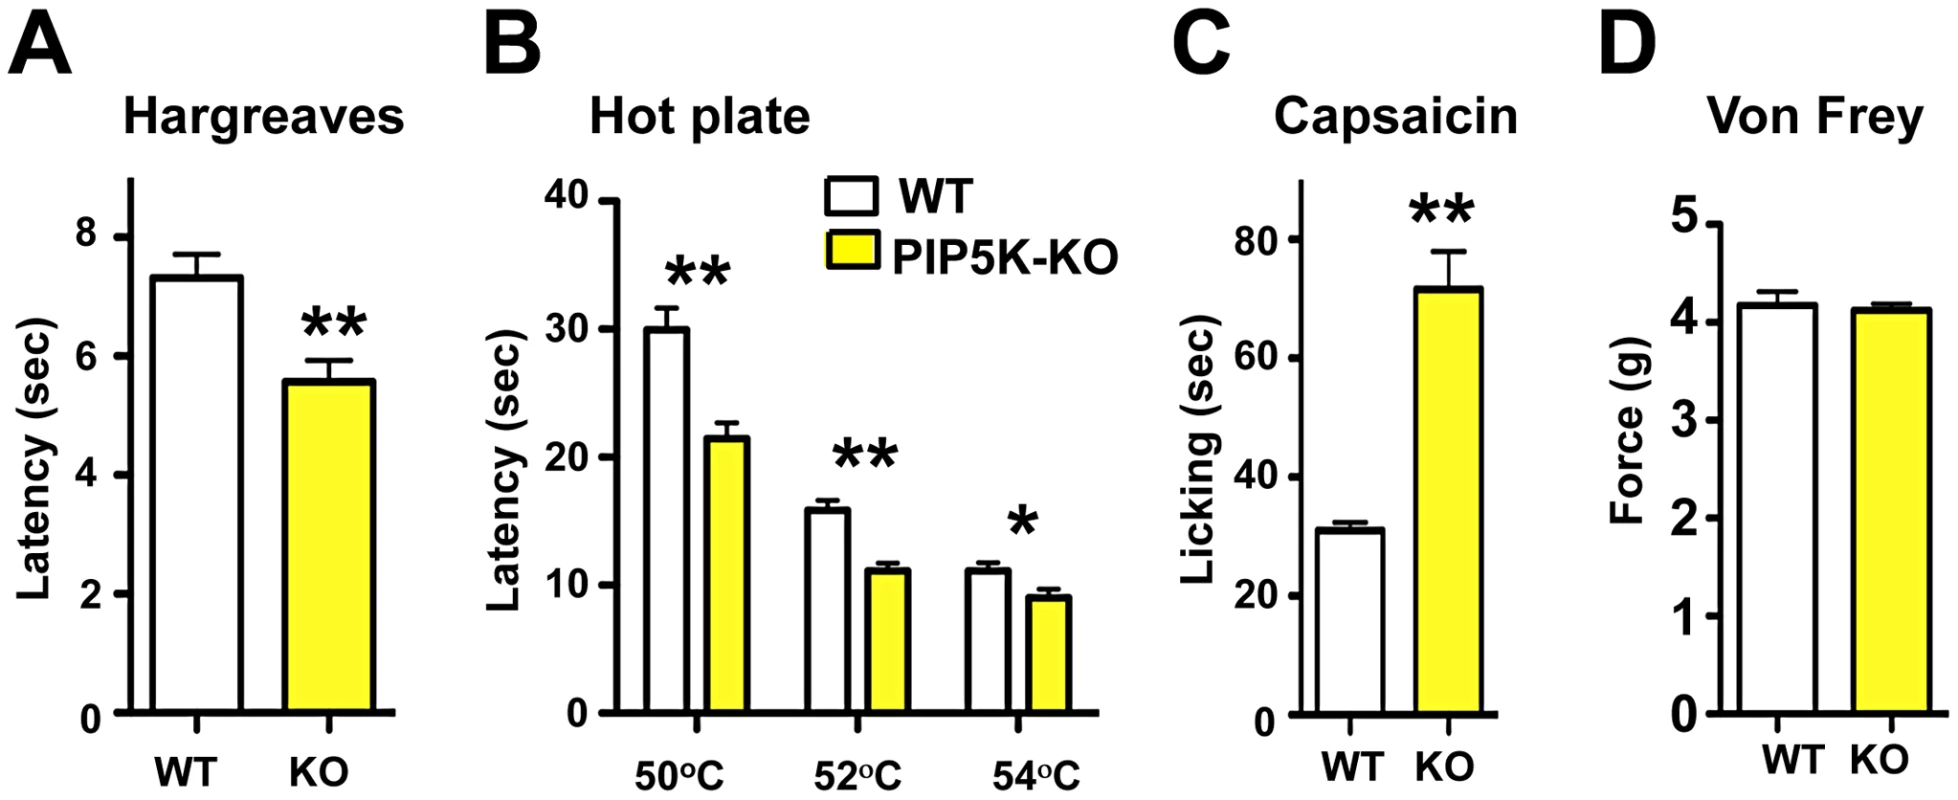 PI5Kα signaling controls thermal and capsaicin nociception <i>in vivo</i>.